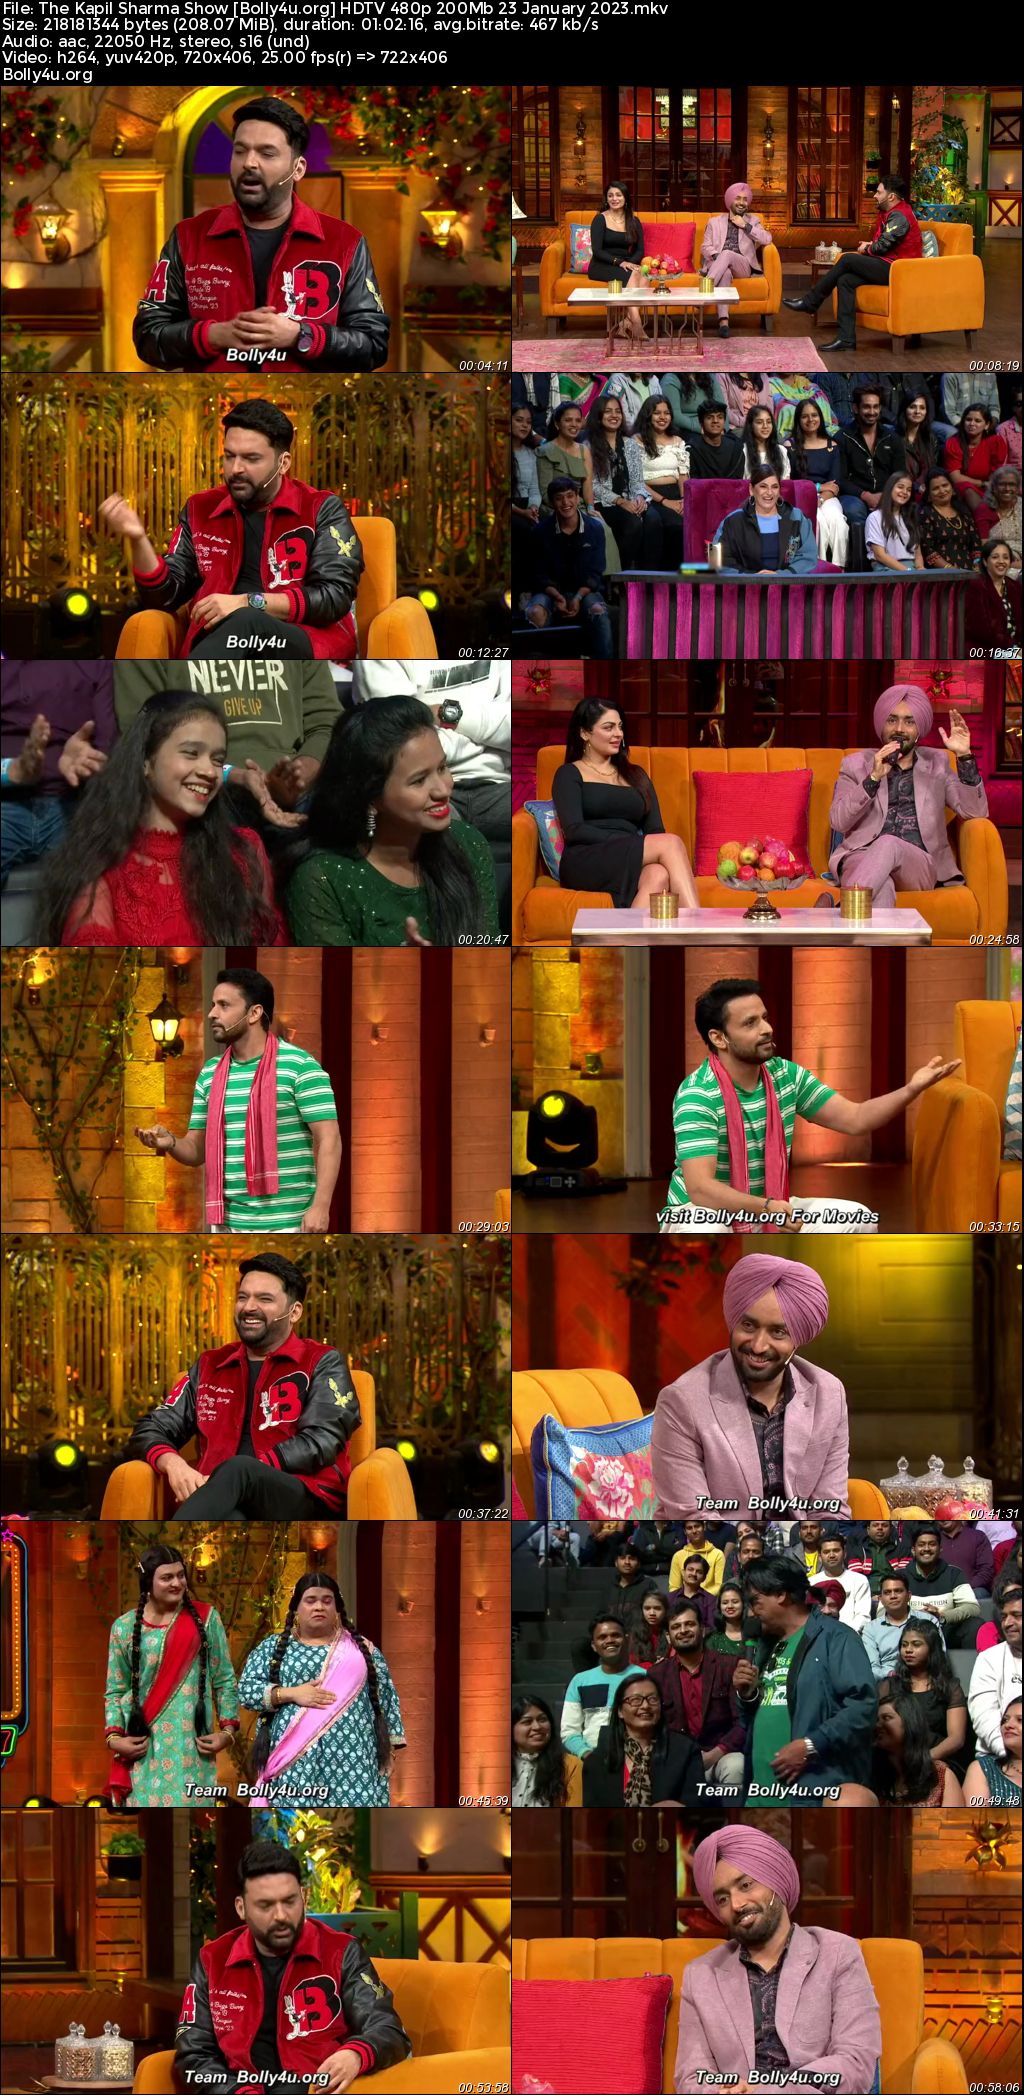 The Kapil Sharma Show HDTV 480p 200Mb 23 January 2023 Download